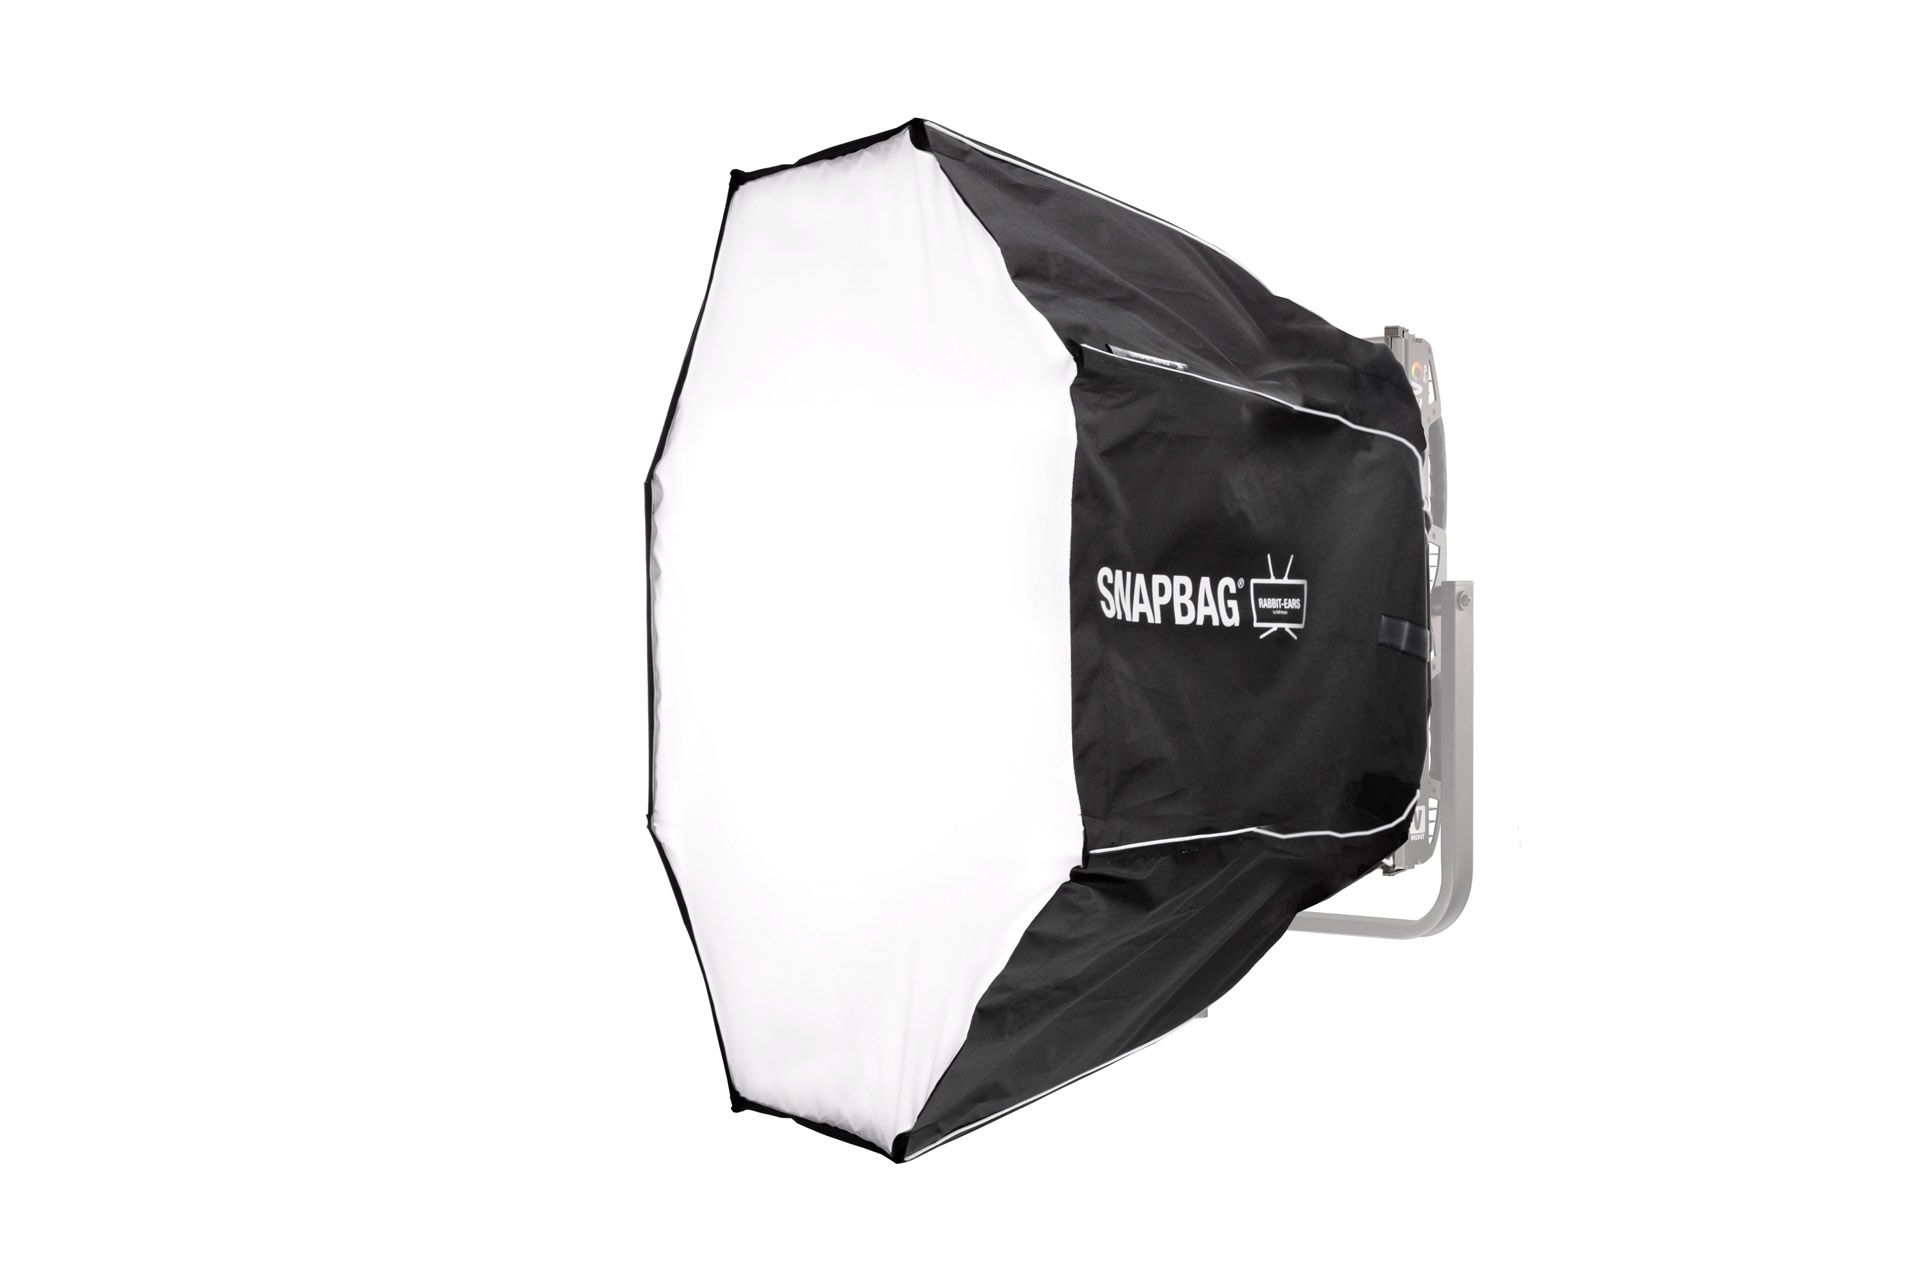 OCTA 5 foldable Snapbag 1,5m diameter (requires Rabbit Ears frame mount)